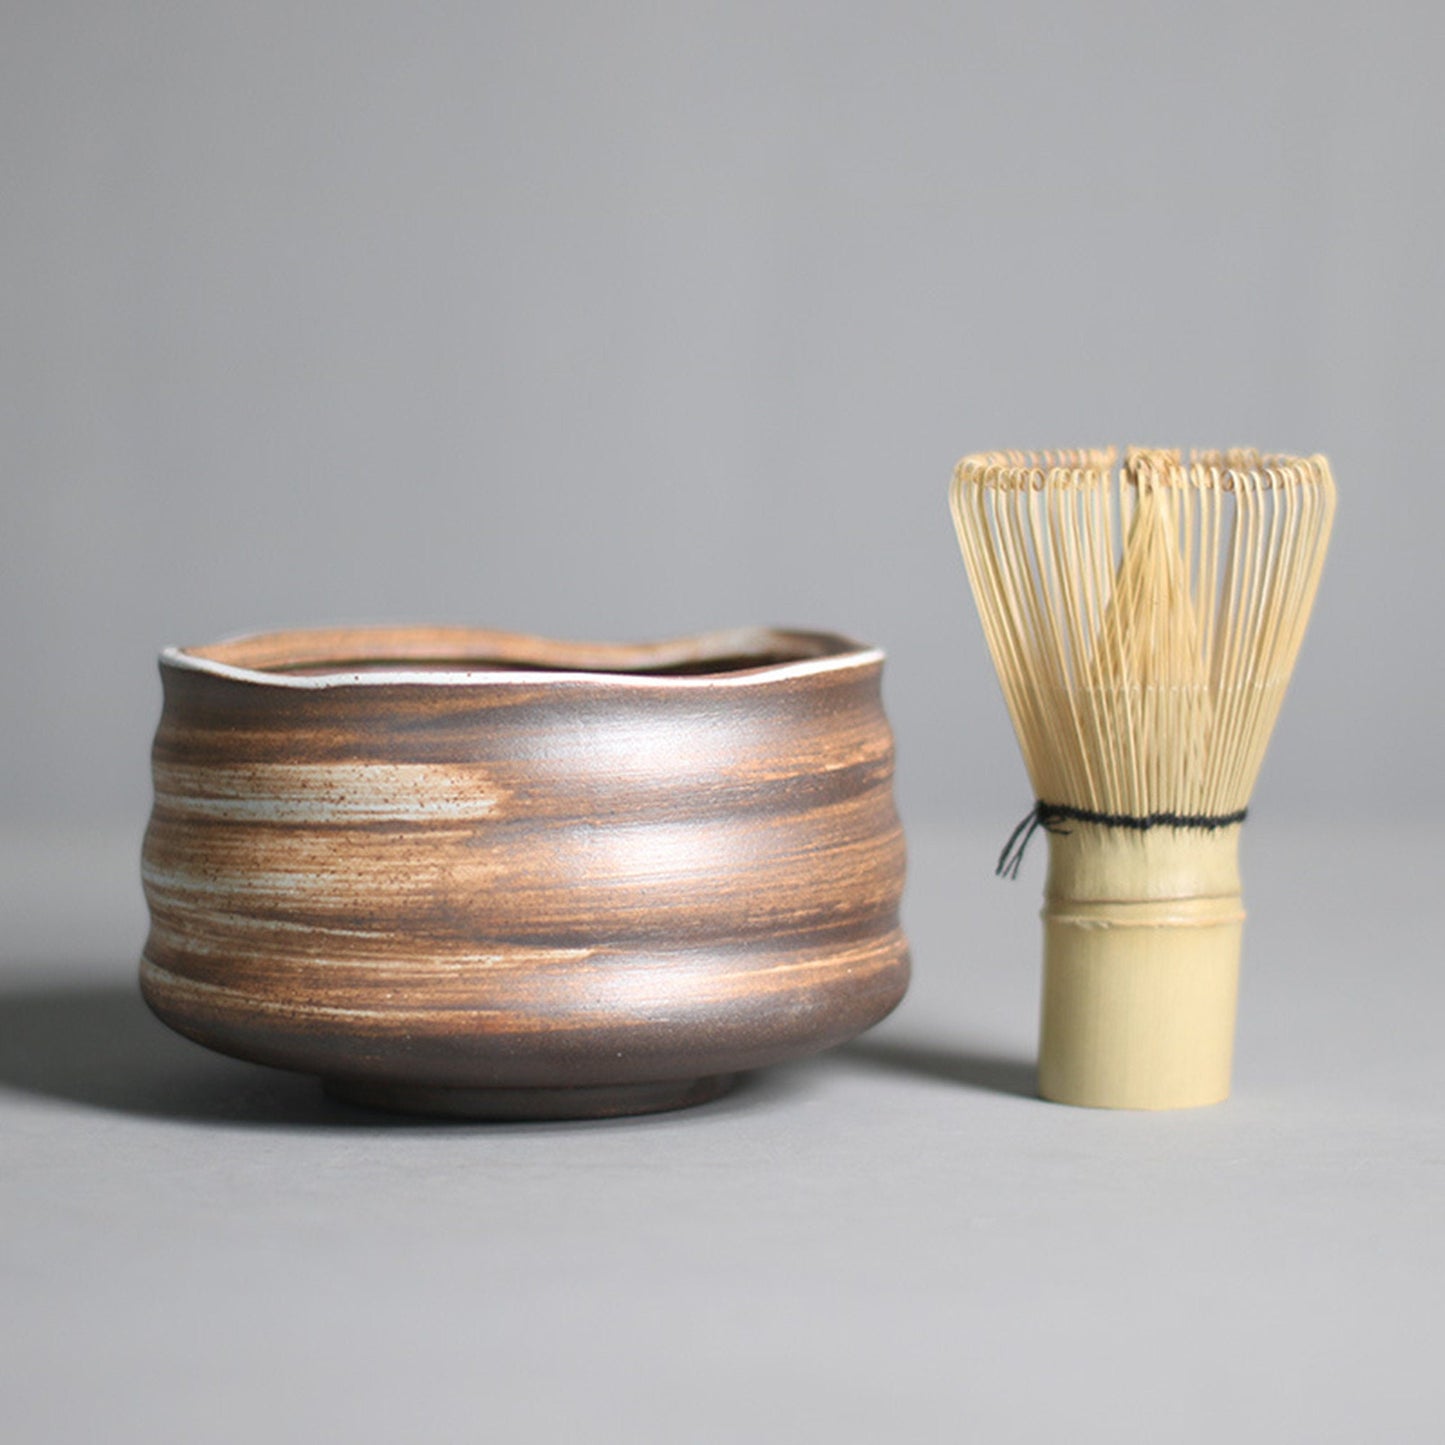 Japanese Ceramic Matcha Bowls with Bamboo Whisk Tea Ceremony Sets Matcha Tea Sets